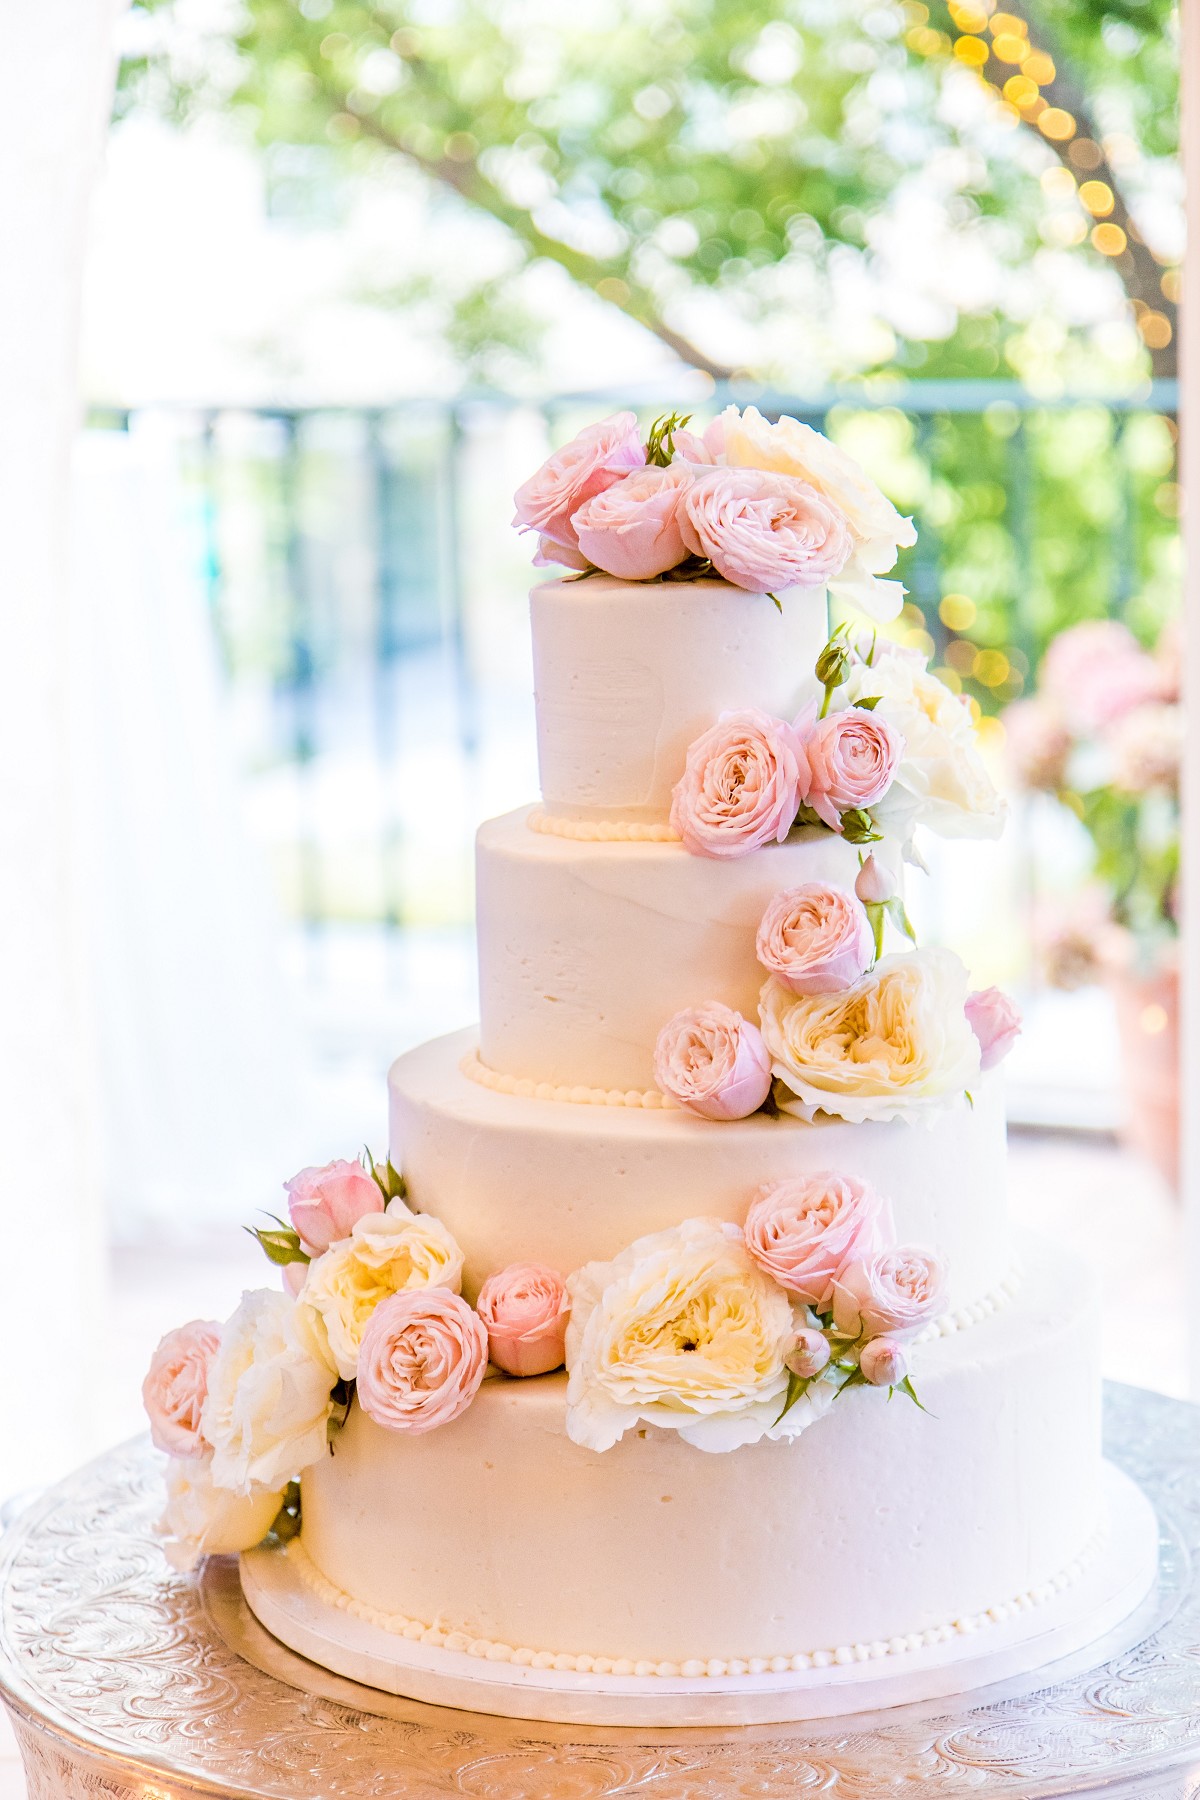 wedding-cake-794326-unsplash